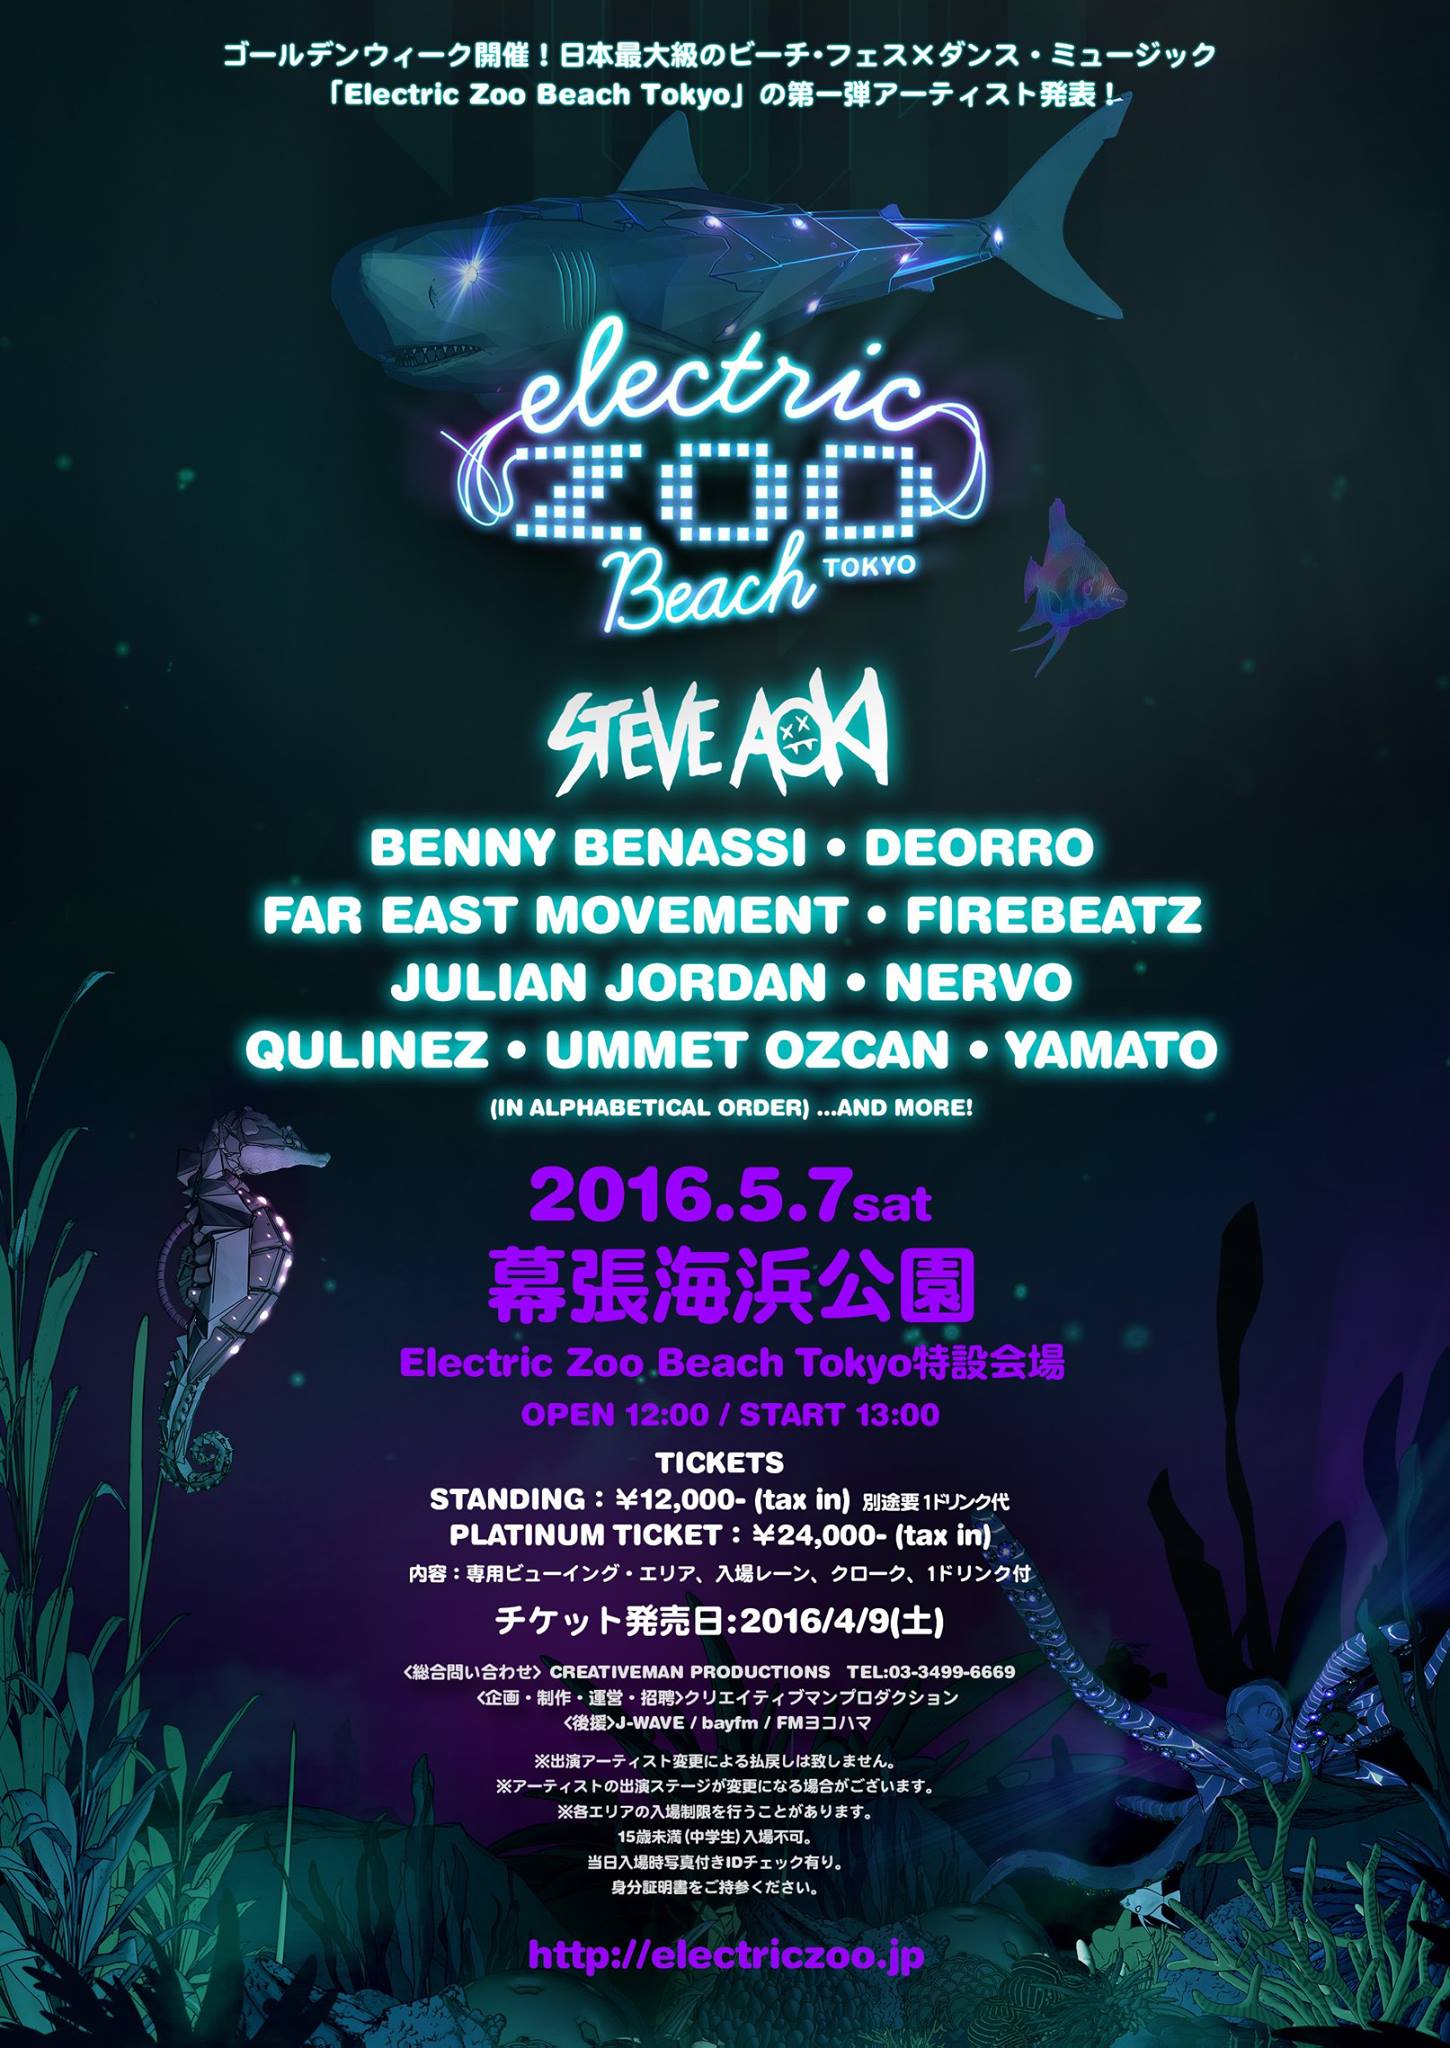 Electric Zoo Beach Tokyo 2016 2